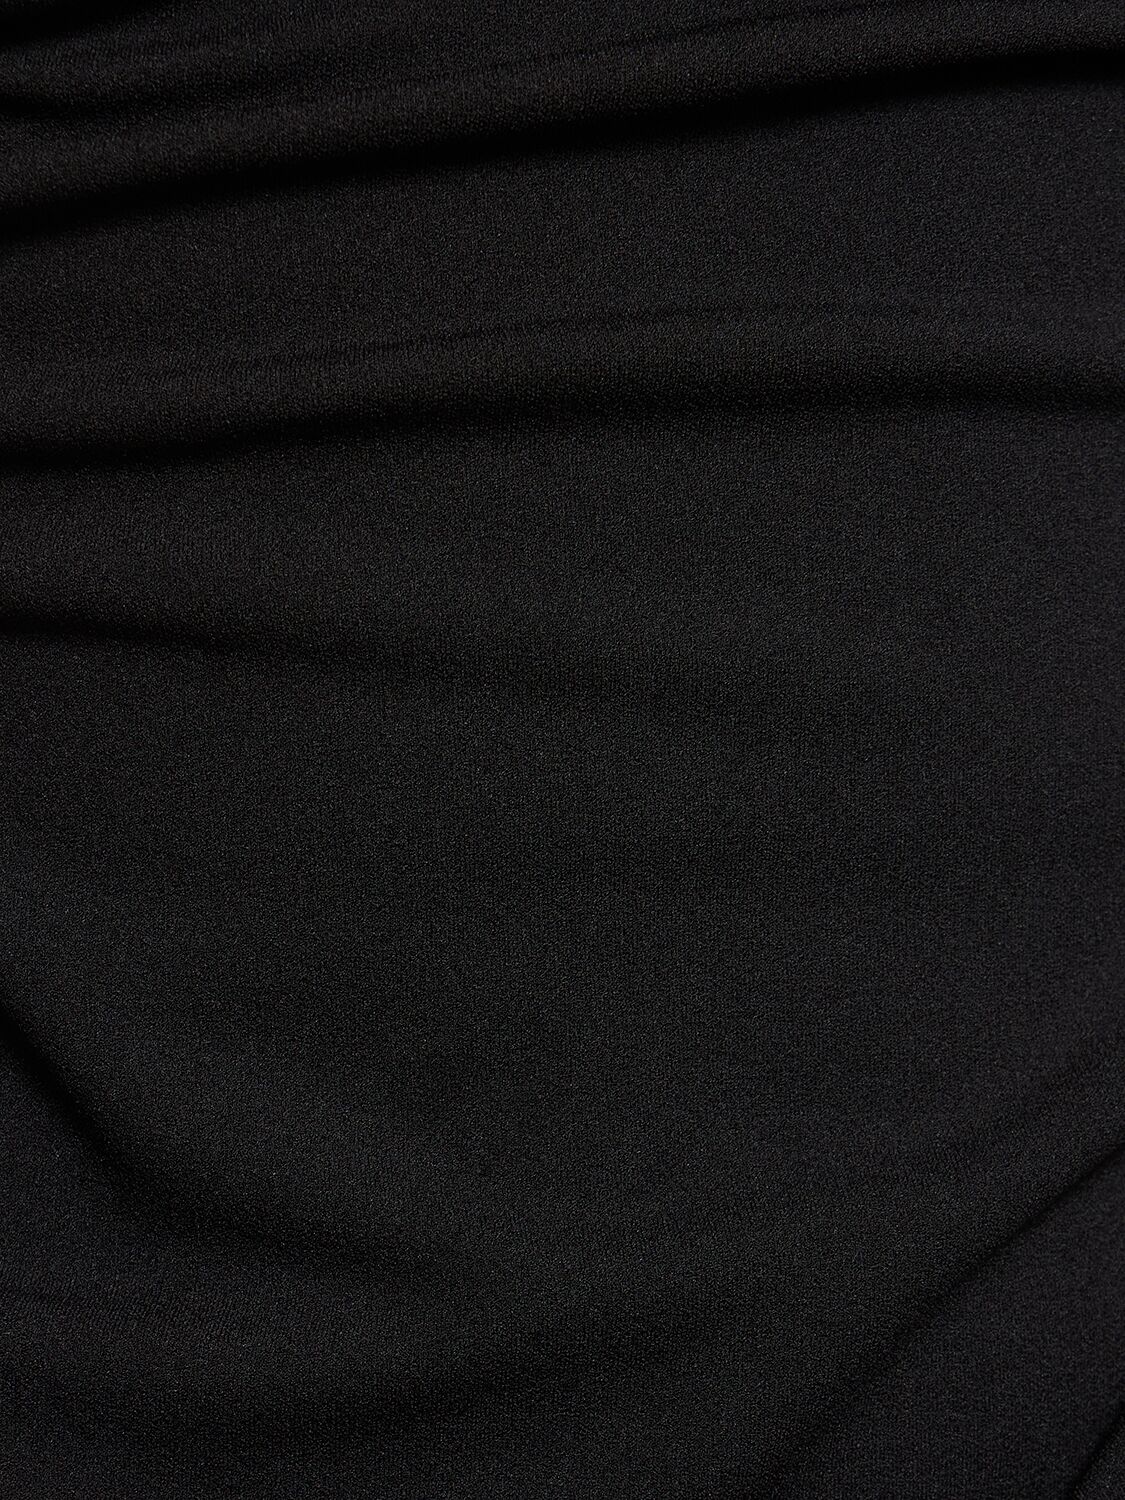 Shop Solace London Joni Squared Neckline Crepe Long Dress In Black